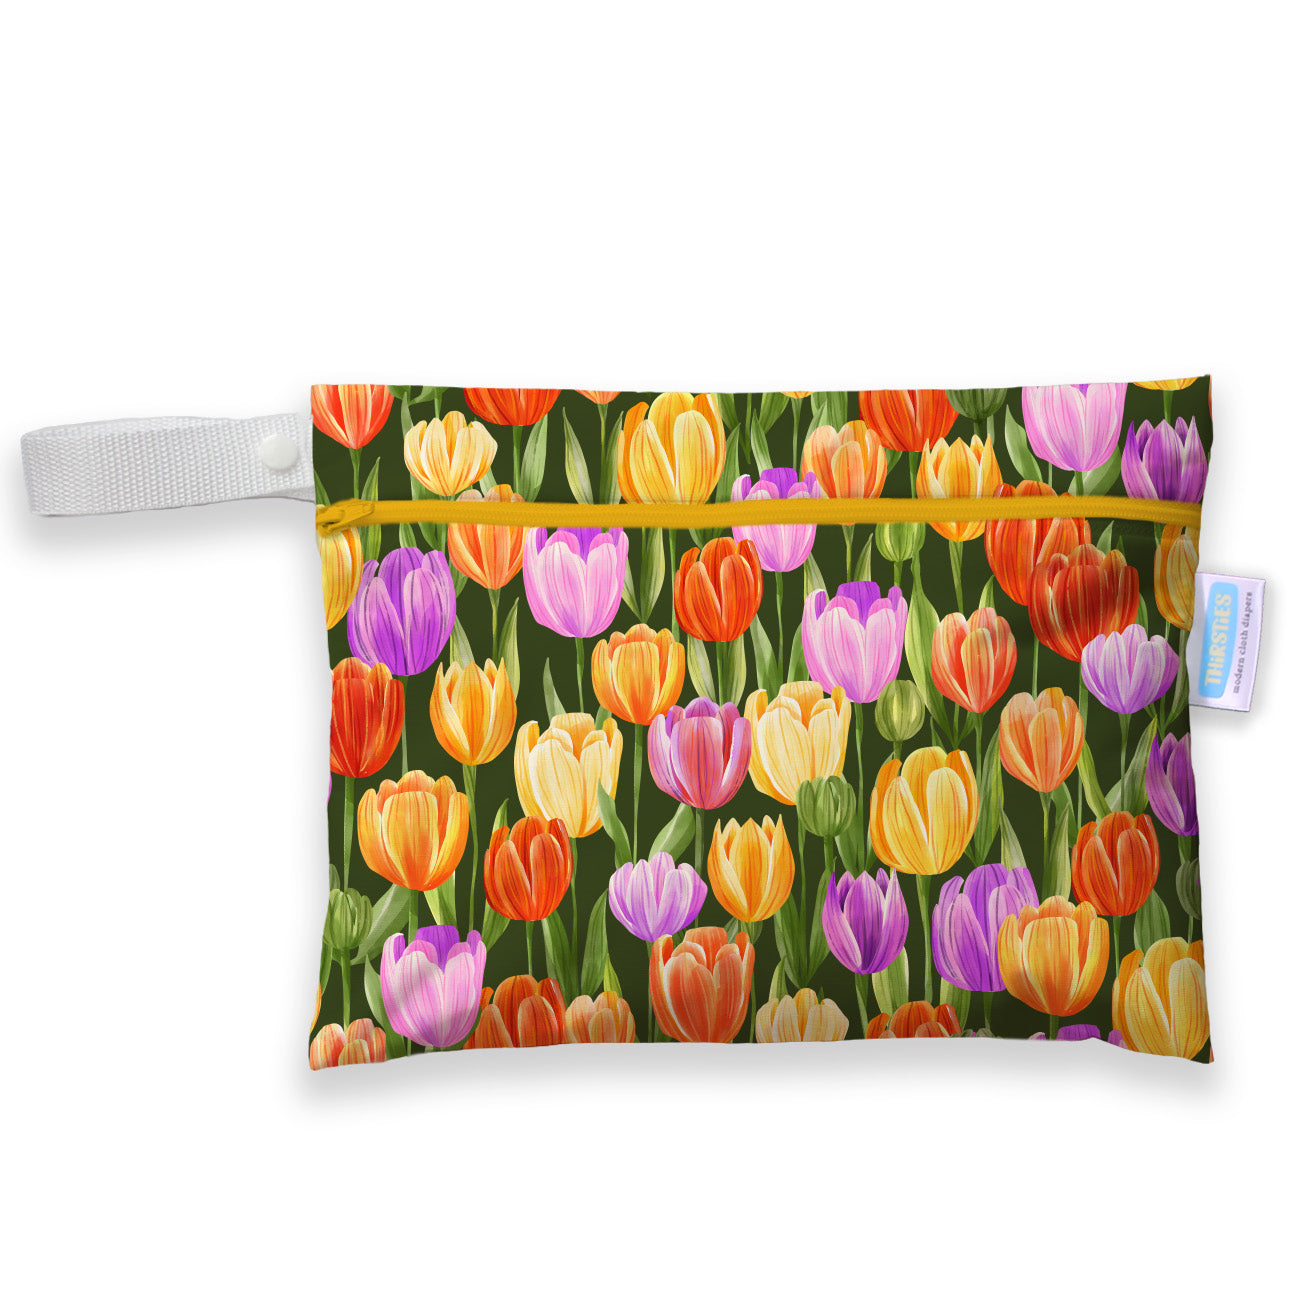 Image of Thirsties Mini Wet Bag in Tulips